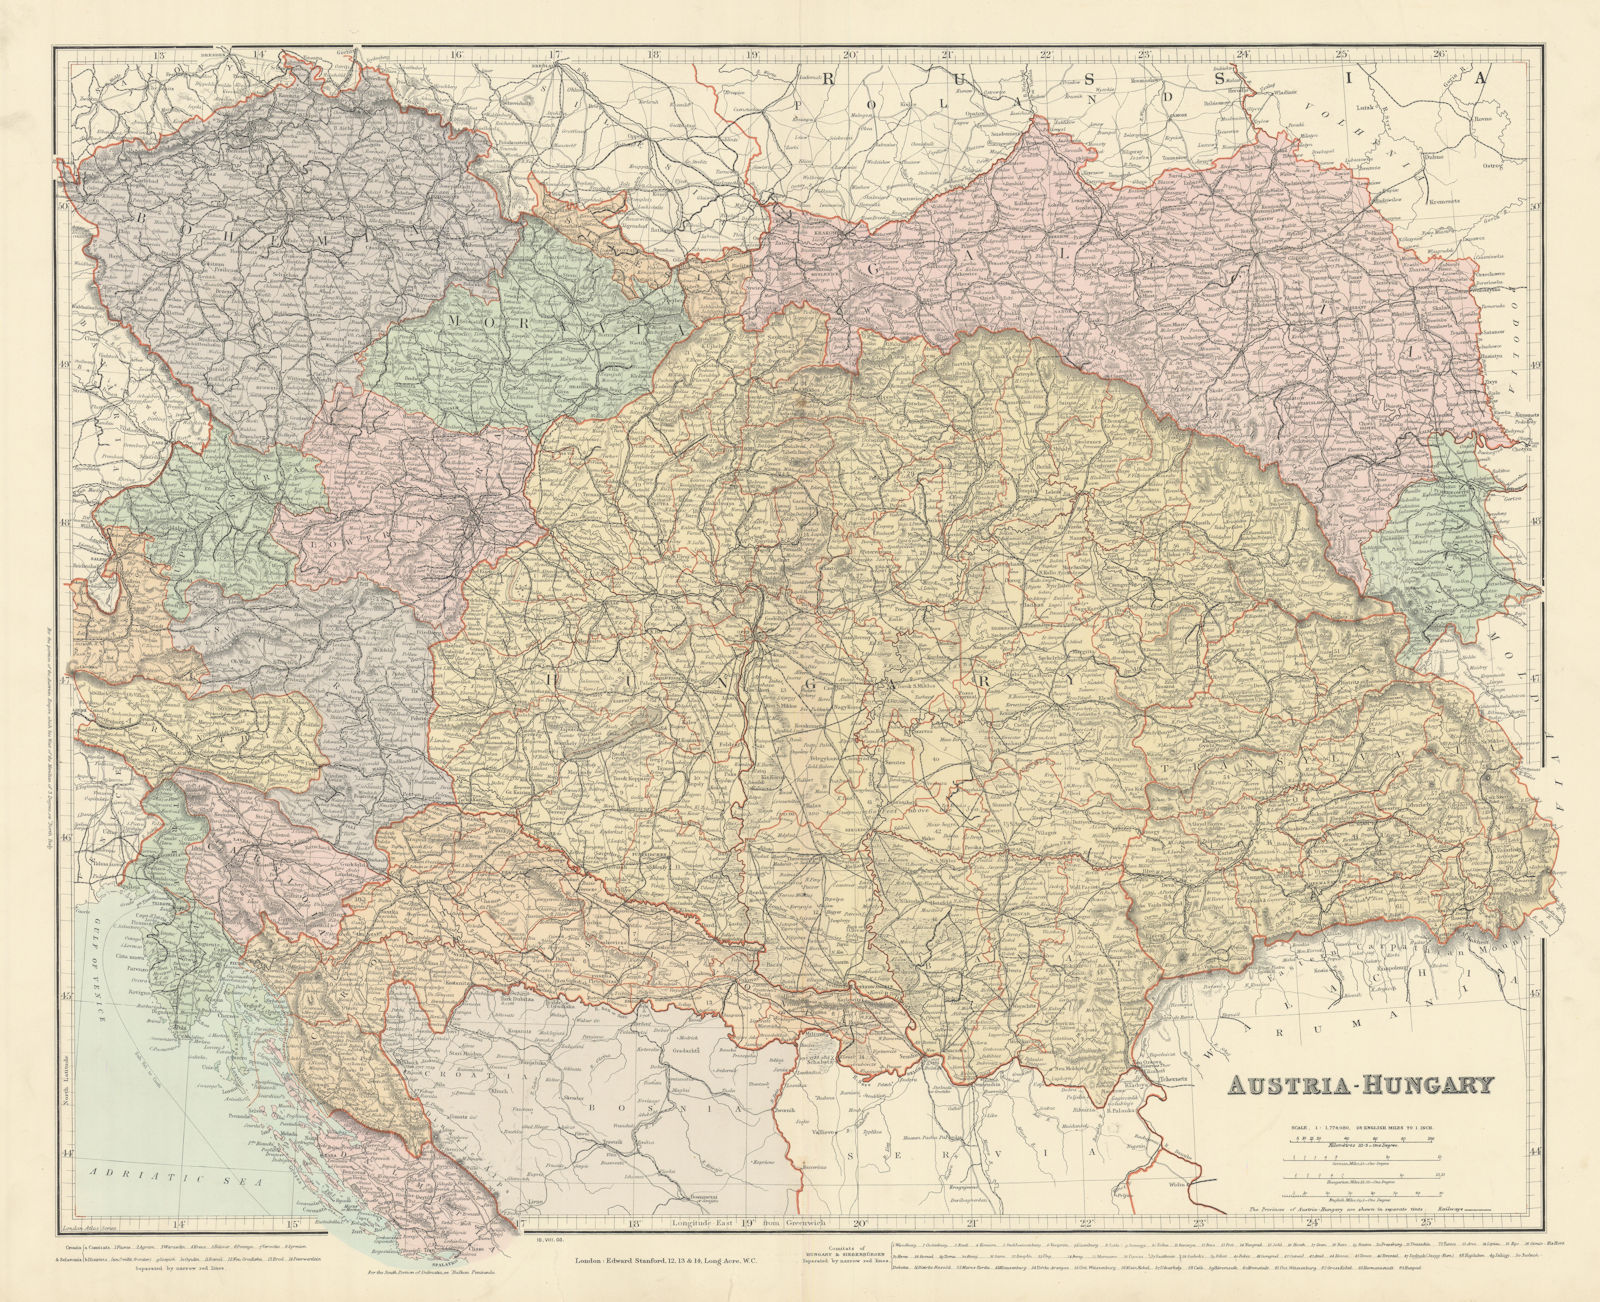 Austria-Hungary. Croatia Czechia Bohemia Galicia Transylvania. STANFORD 1904 map